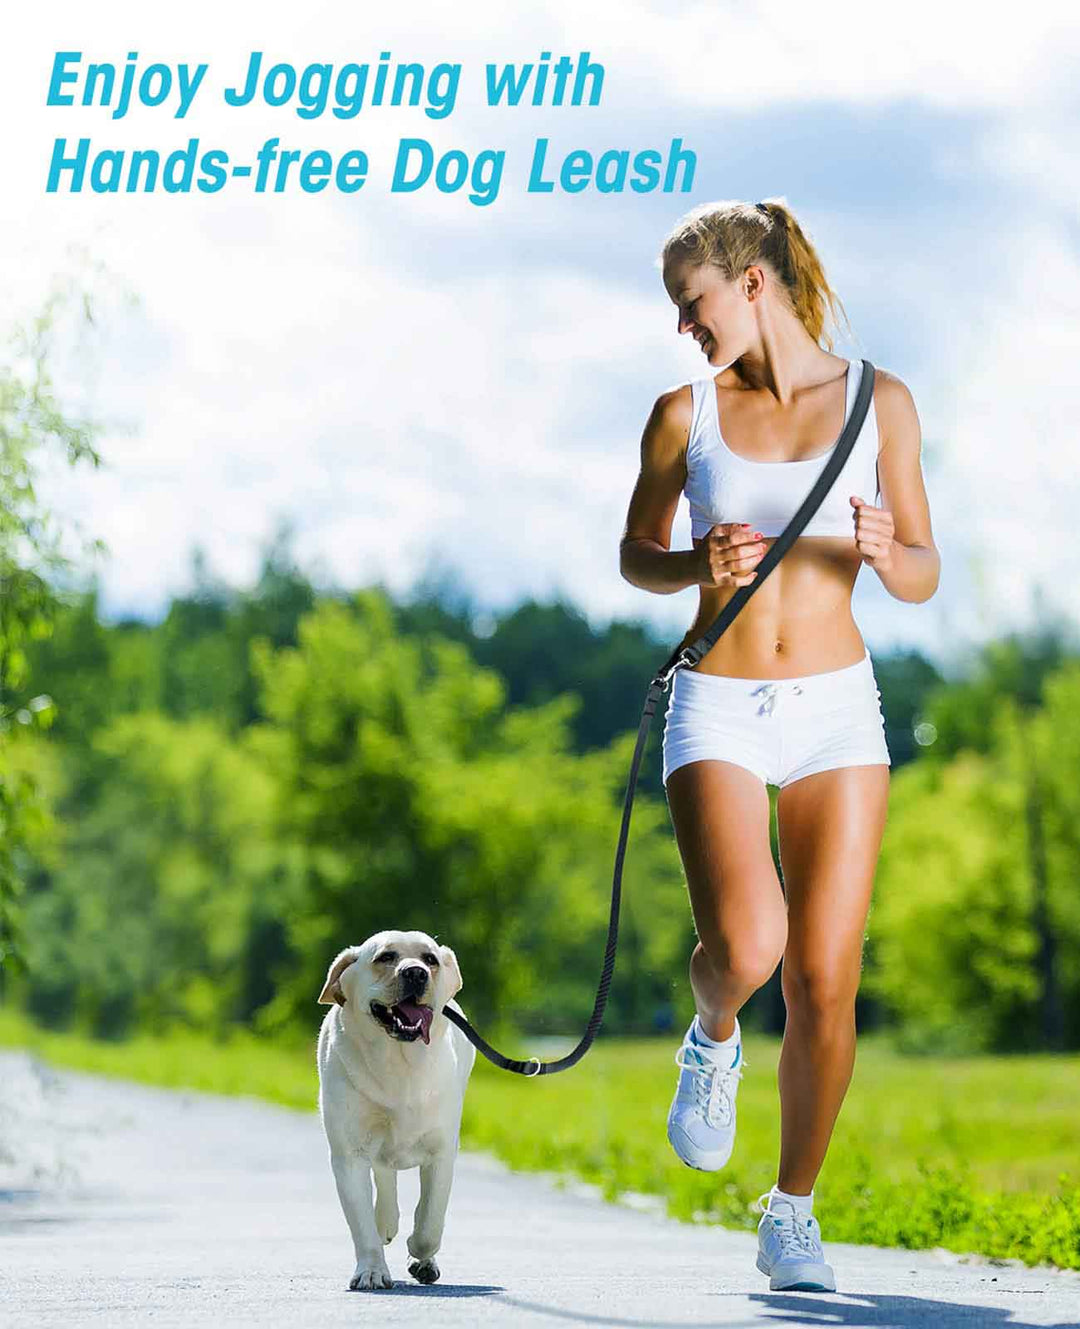 enjoy jogging with hands-free dog leash